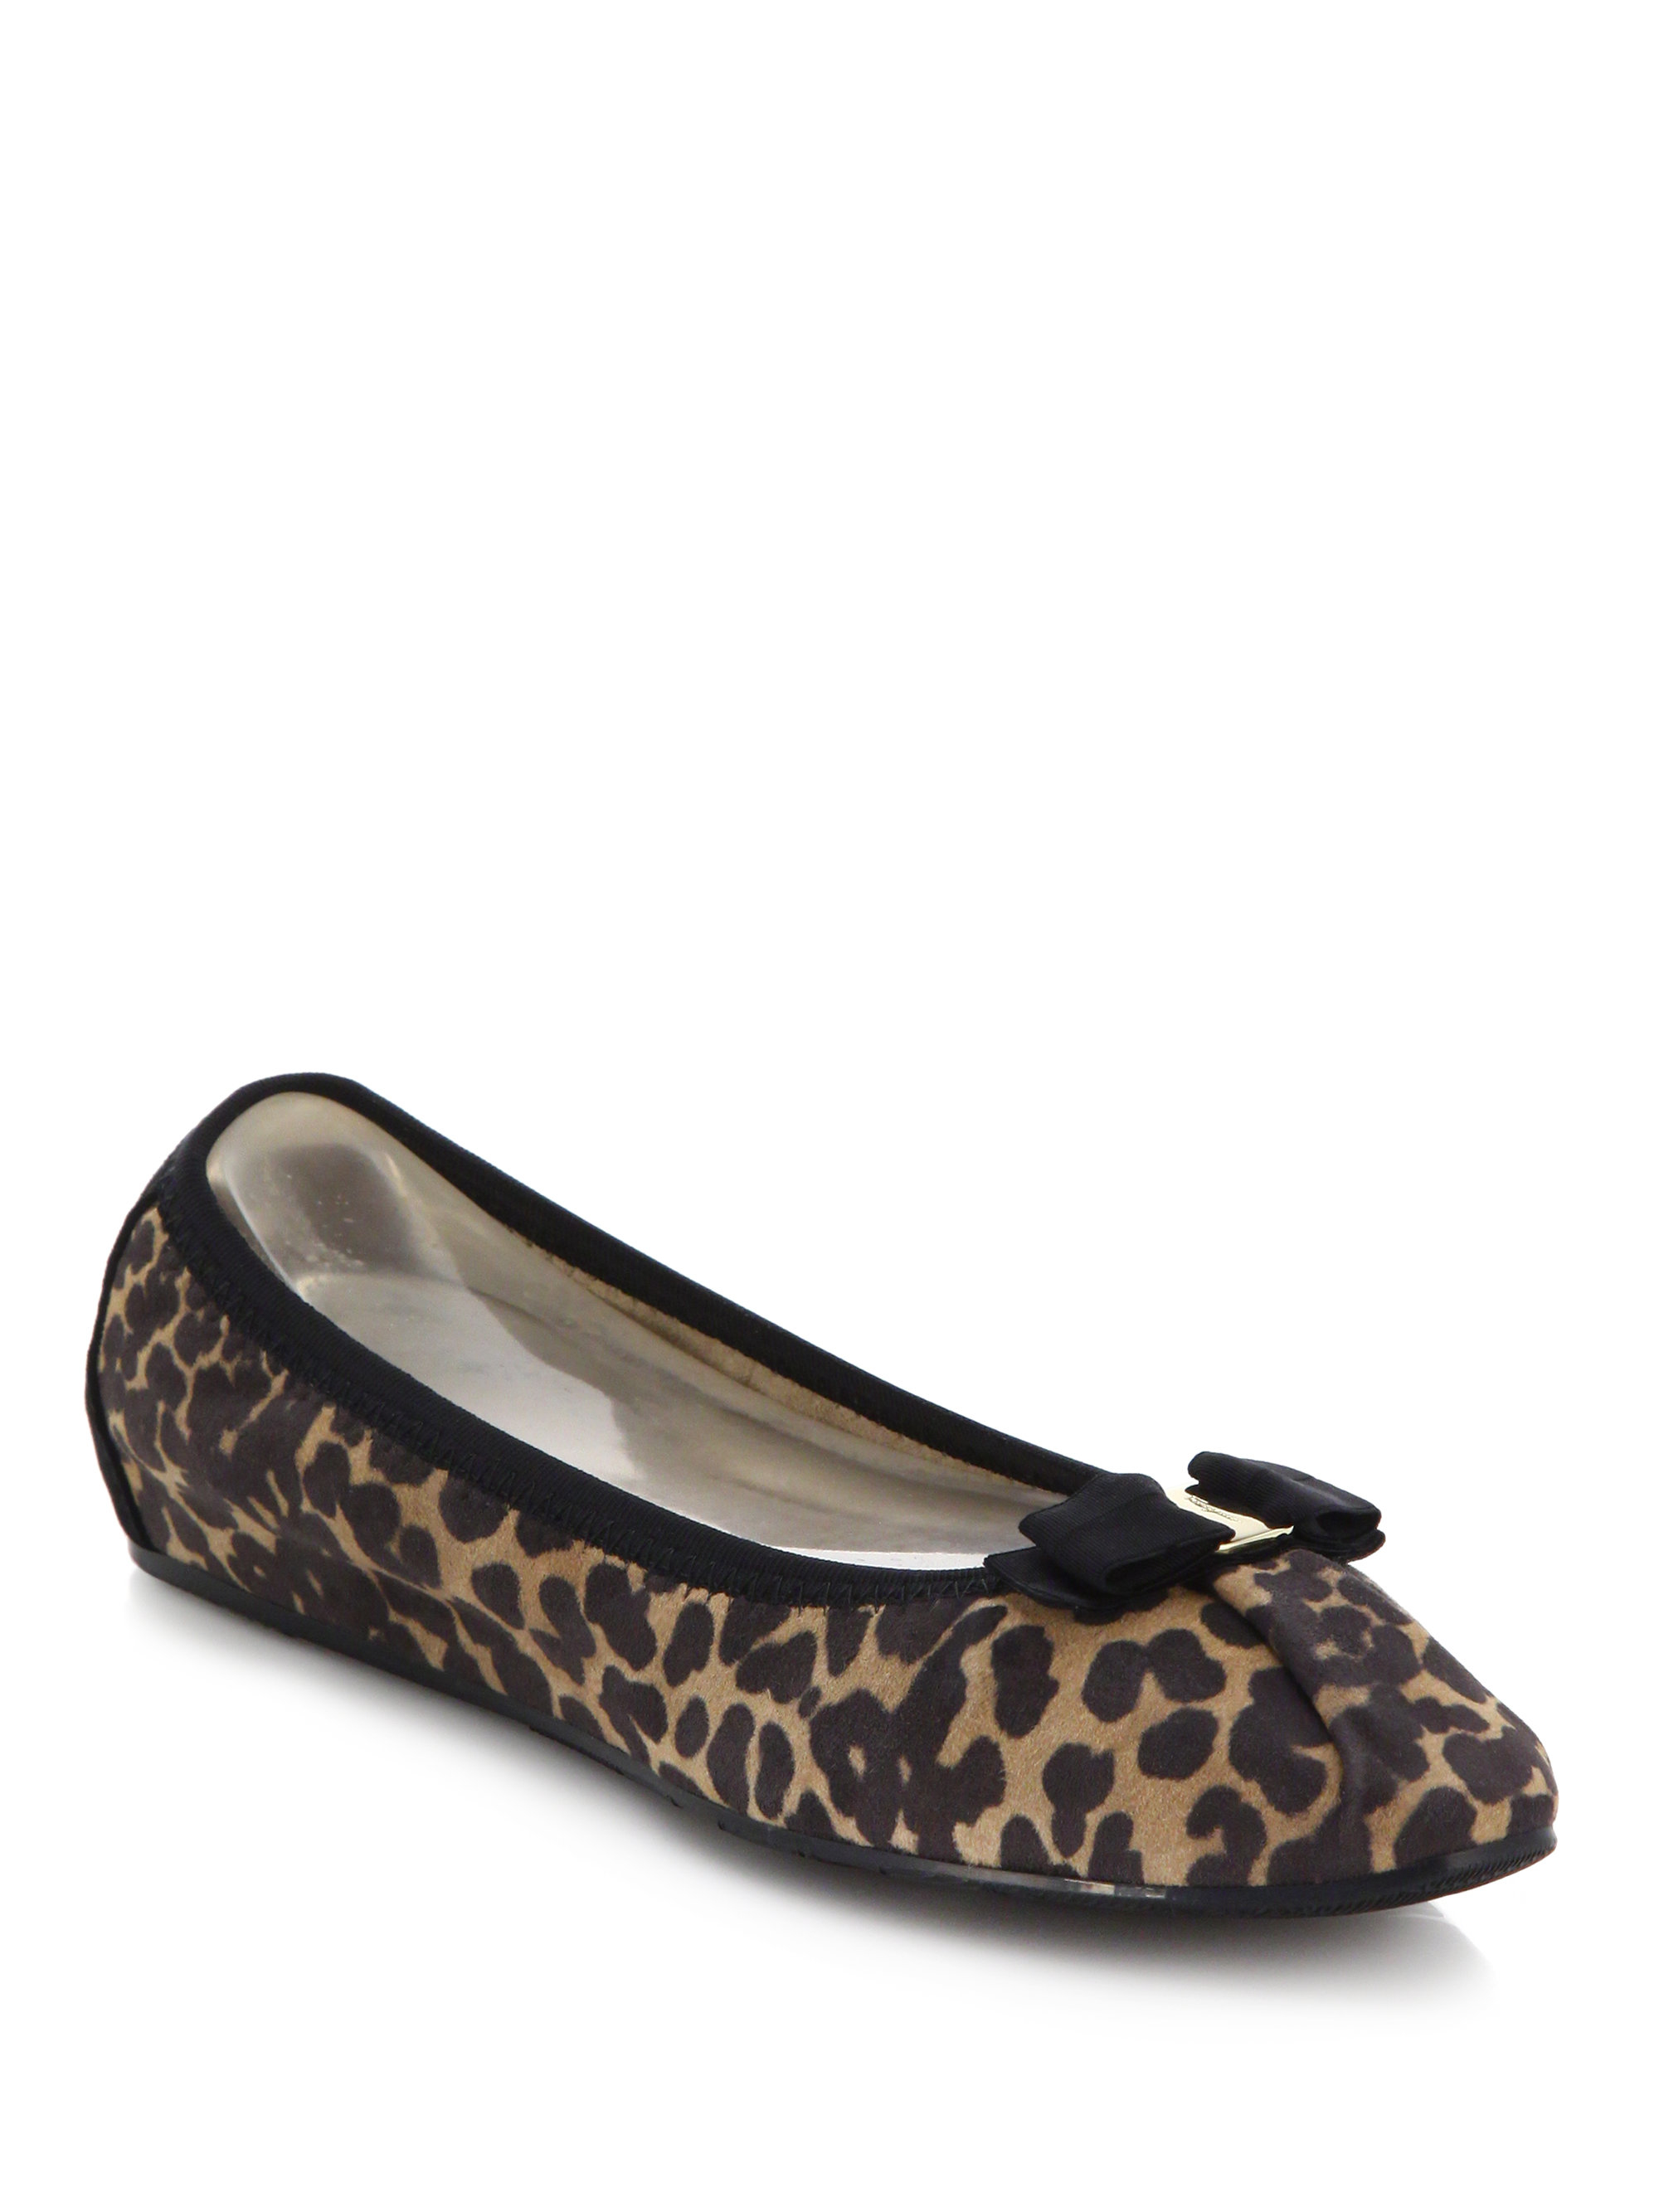 Ferragamo My Joy Leopard-print Suede Flats in Natural | Lyst